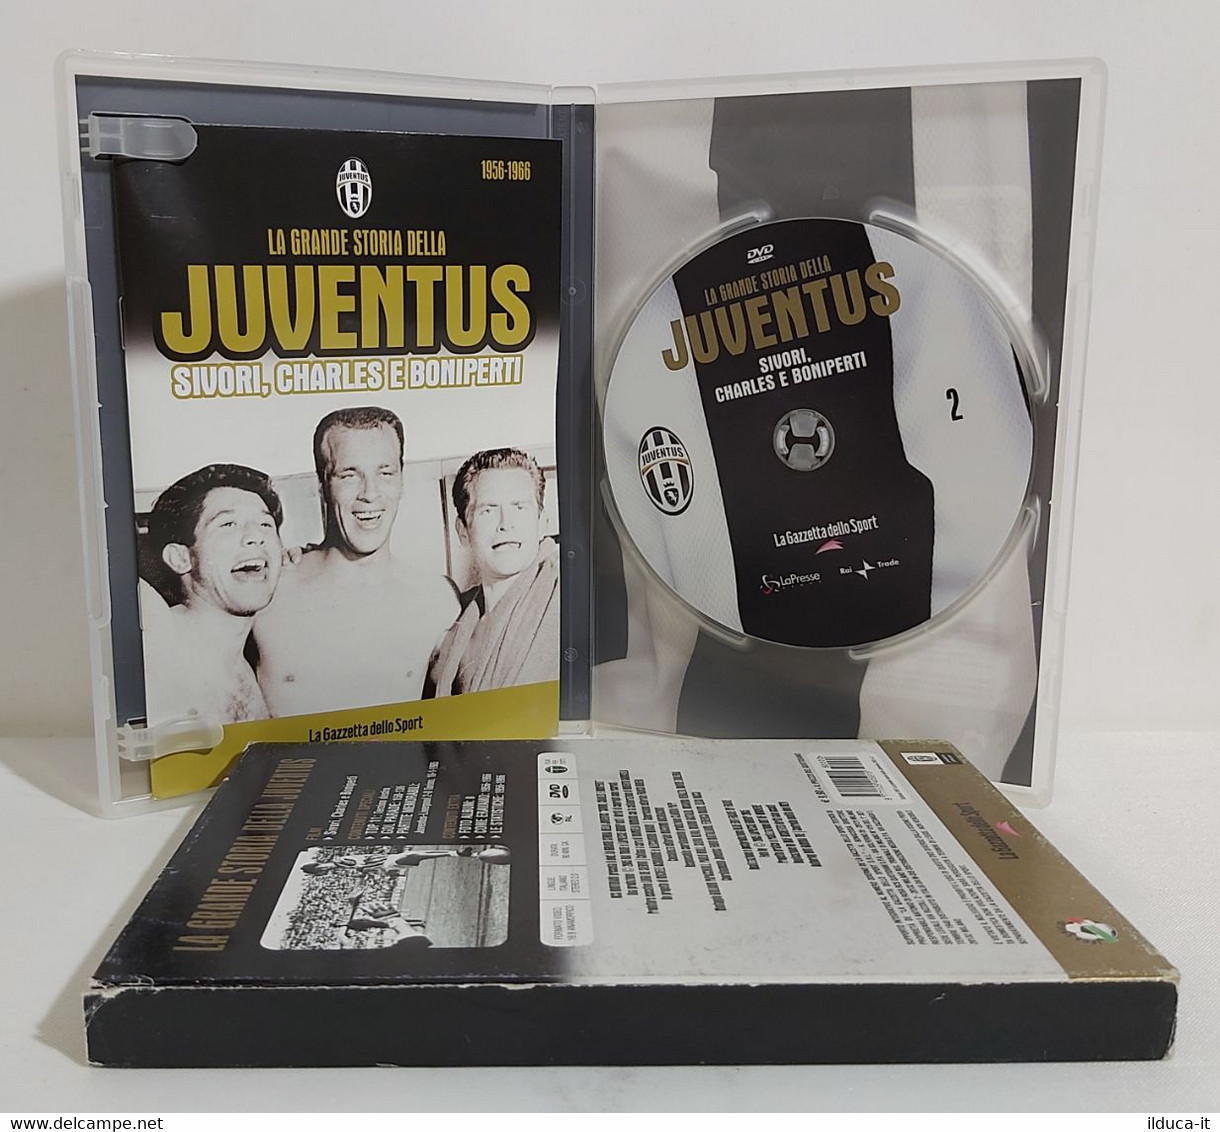 I101795 DVD - La Grande Storia Della Juventus N. 2 - 1956-1966 - Sports